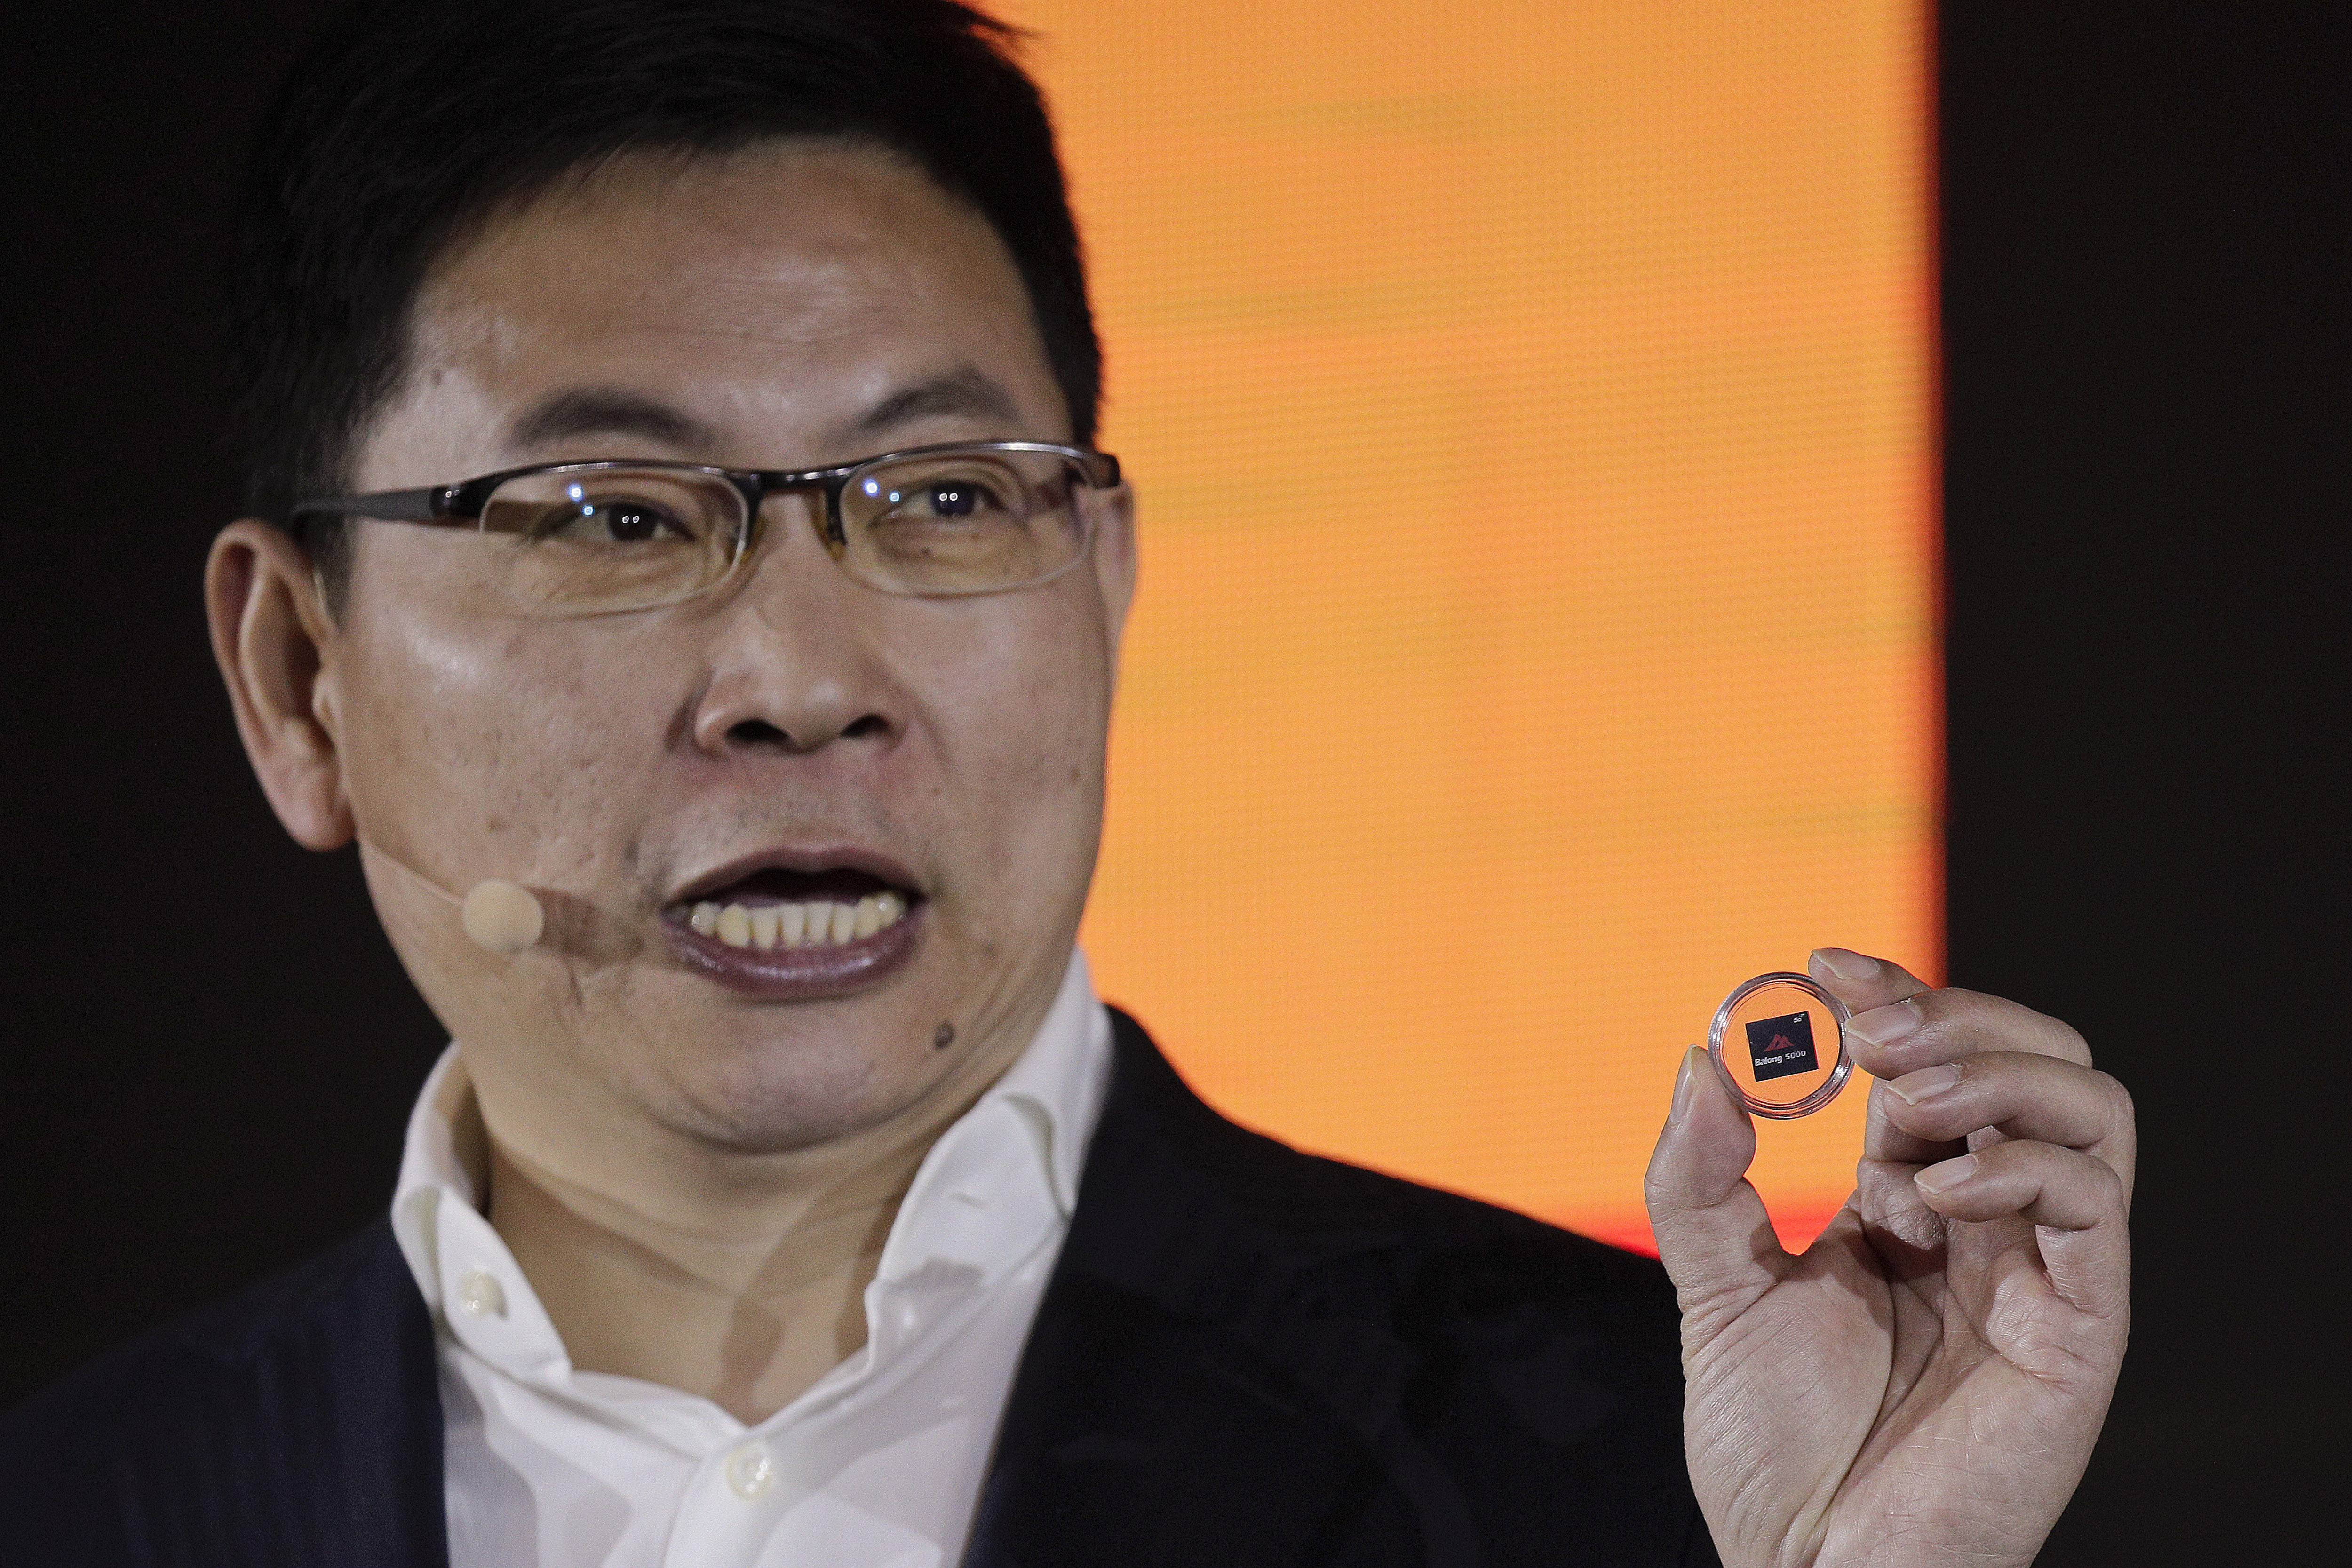 speed gun jammer doors - Huawei Announces 5G Smartphone Based on Own Technology